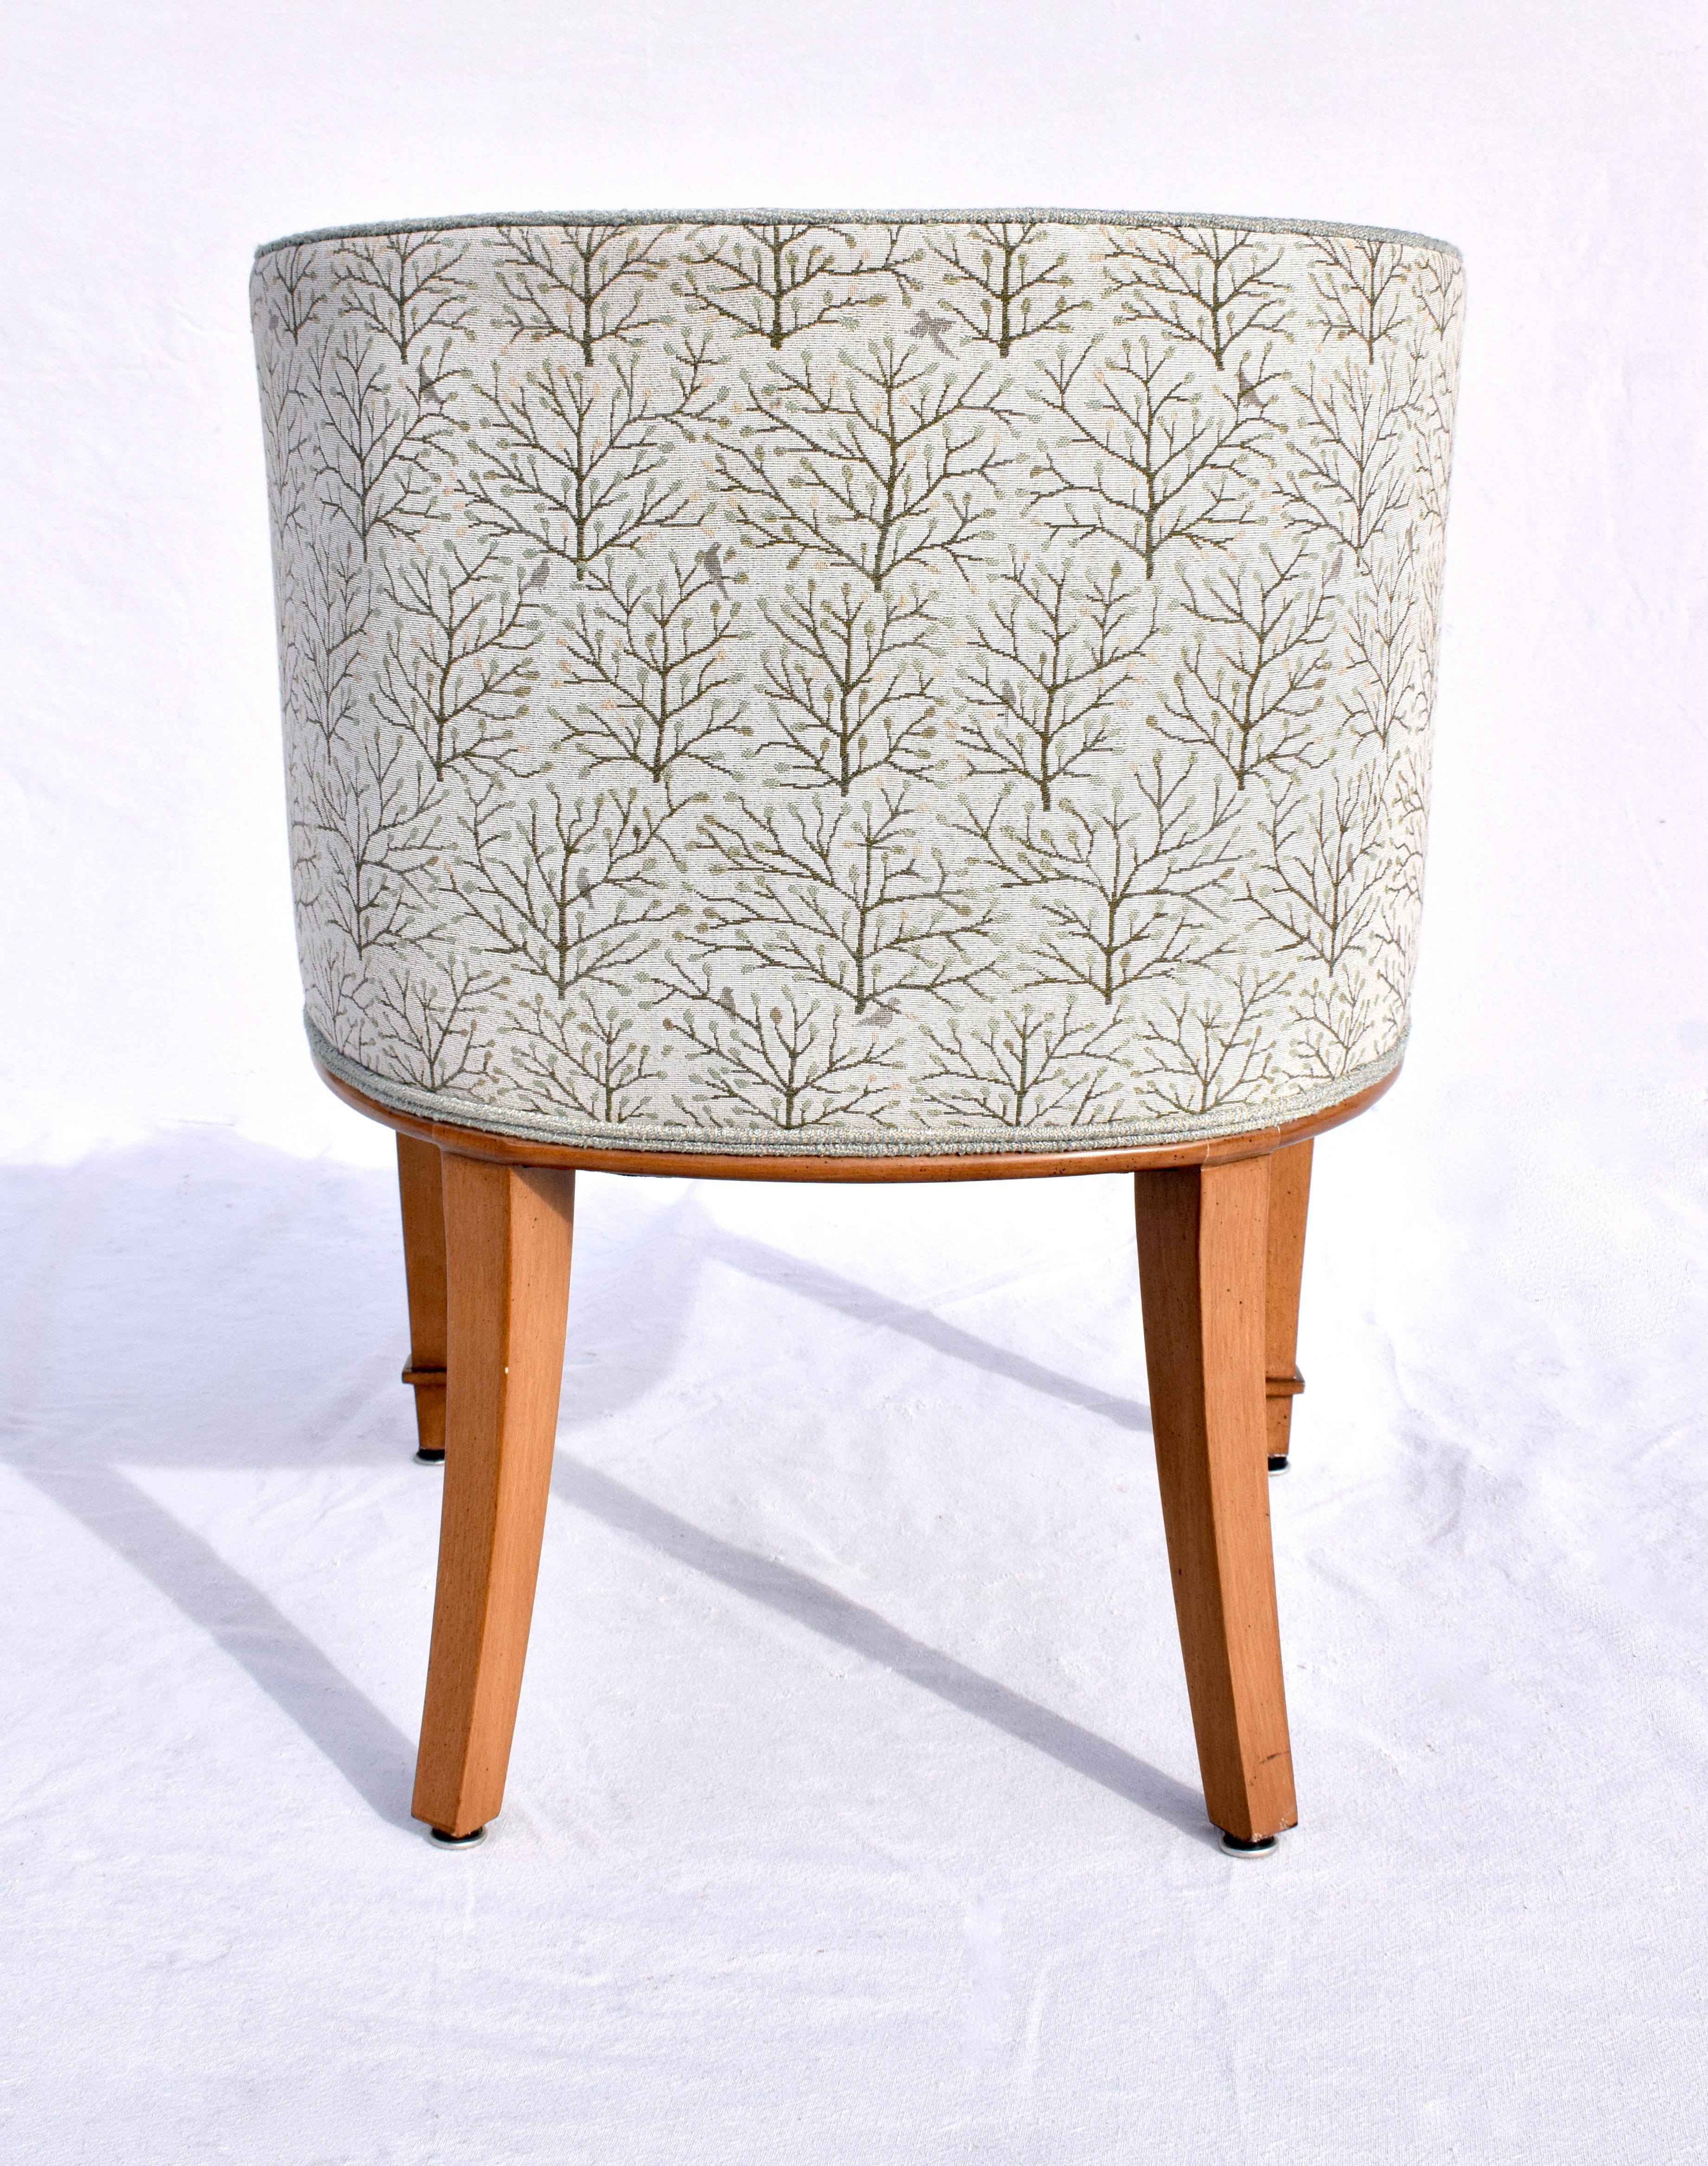 Abalone Edward Ferrell French Style Slipper Chair